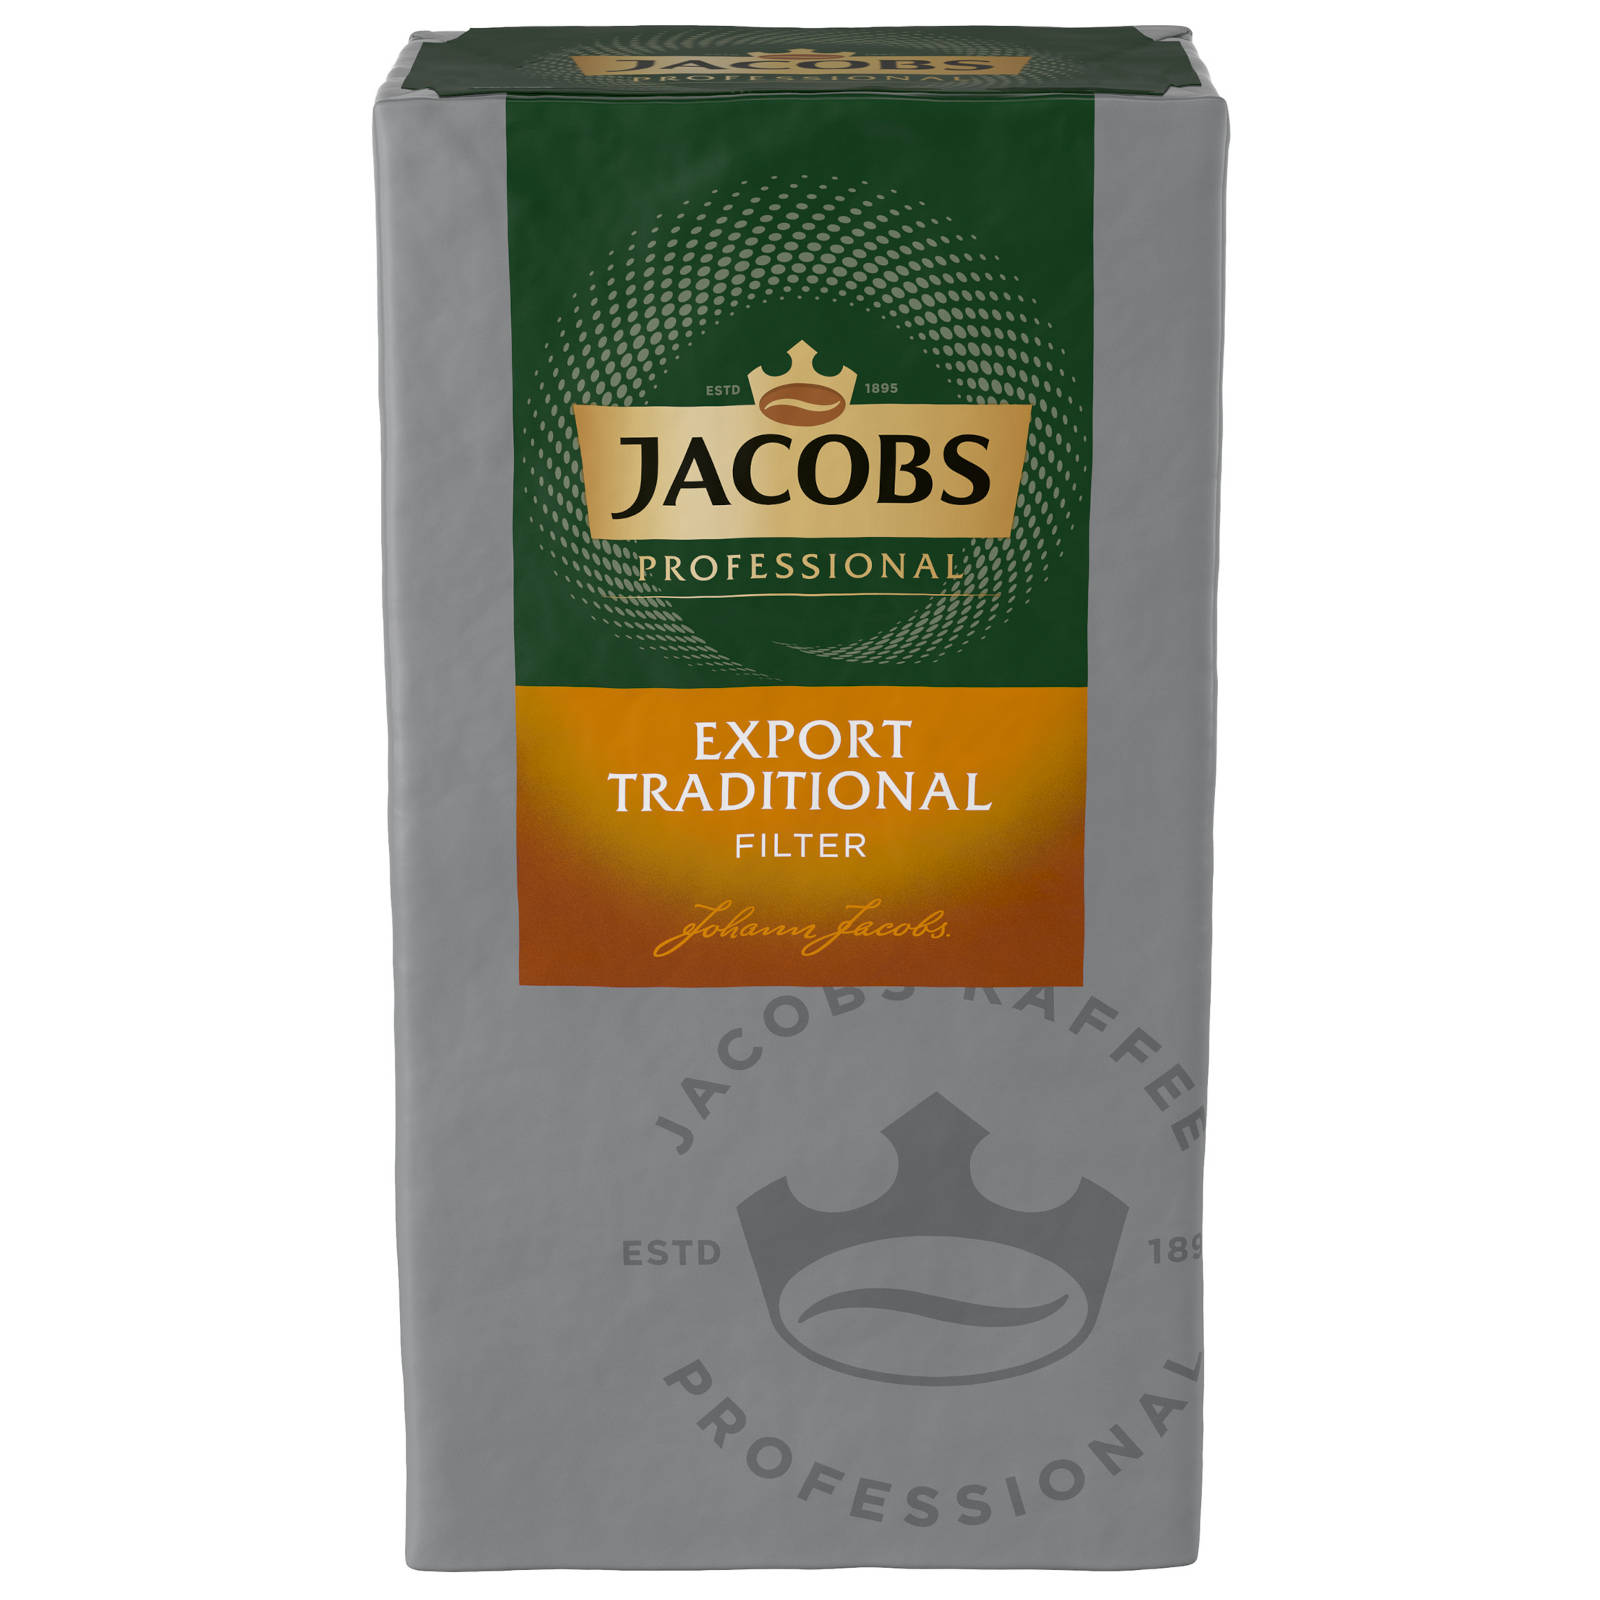 JACOBS Professional Export Traditional 4x500 Siebträgermaschinen) g (Kaffeevollautomaten, Filterkaffee